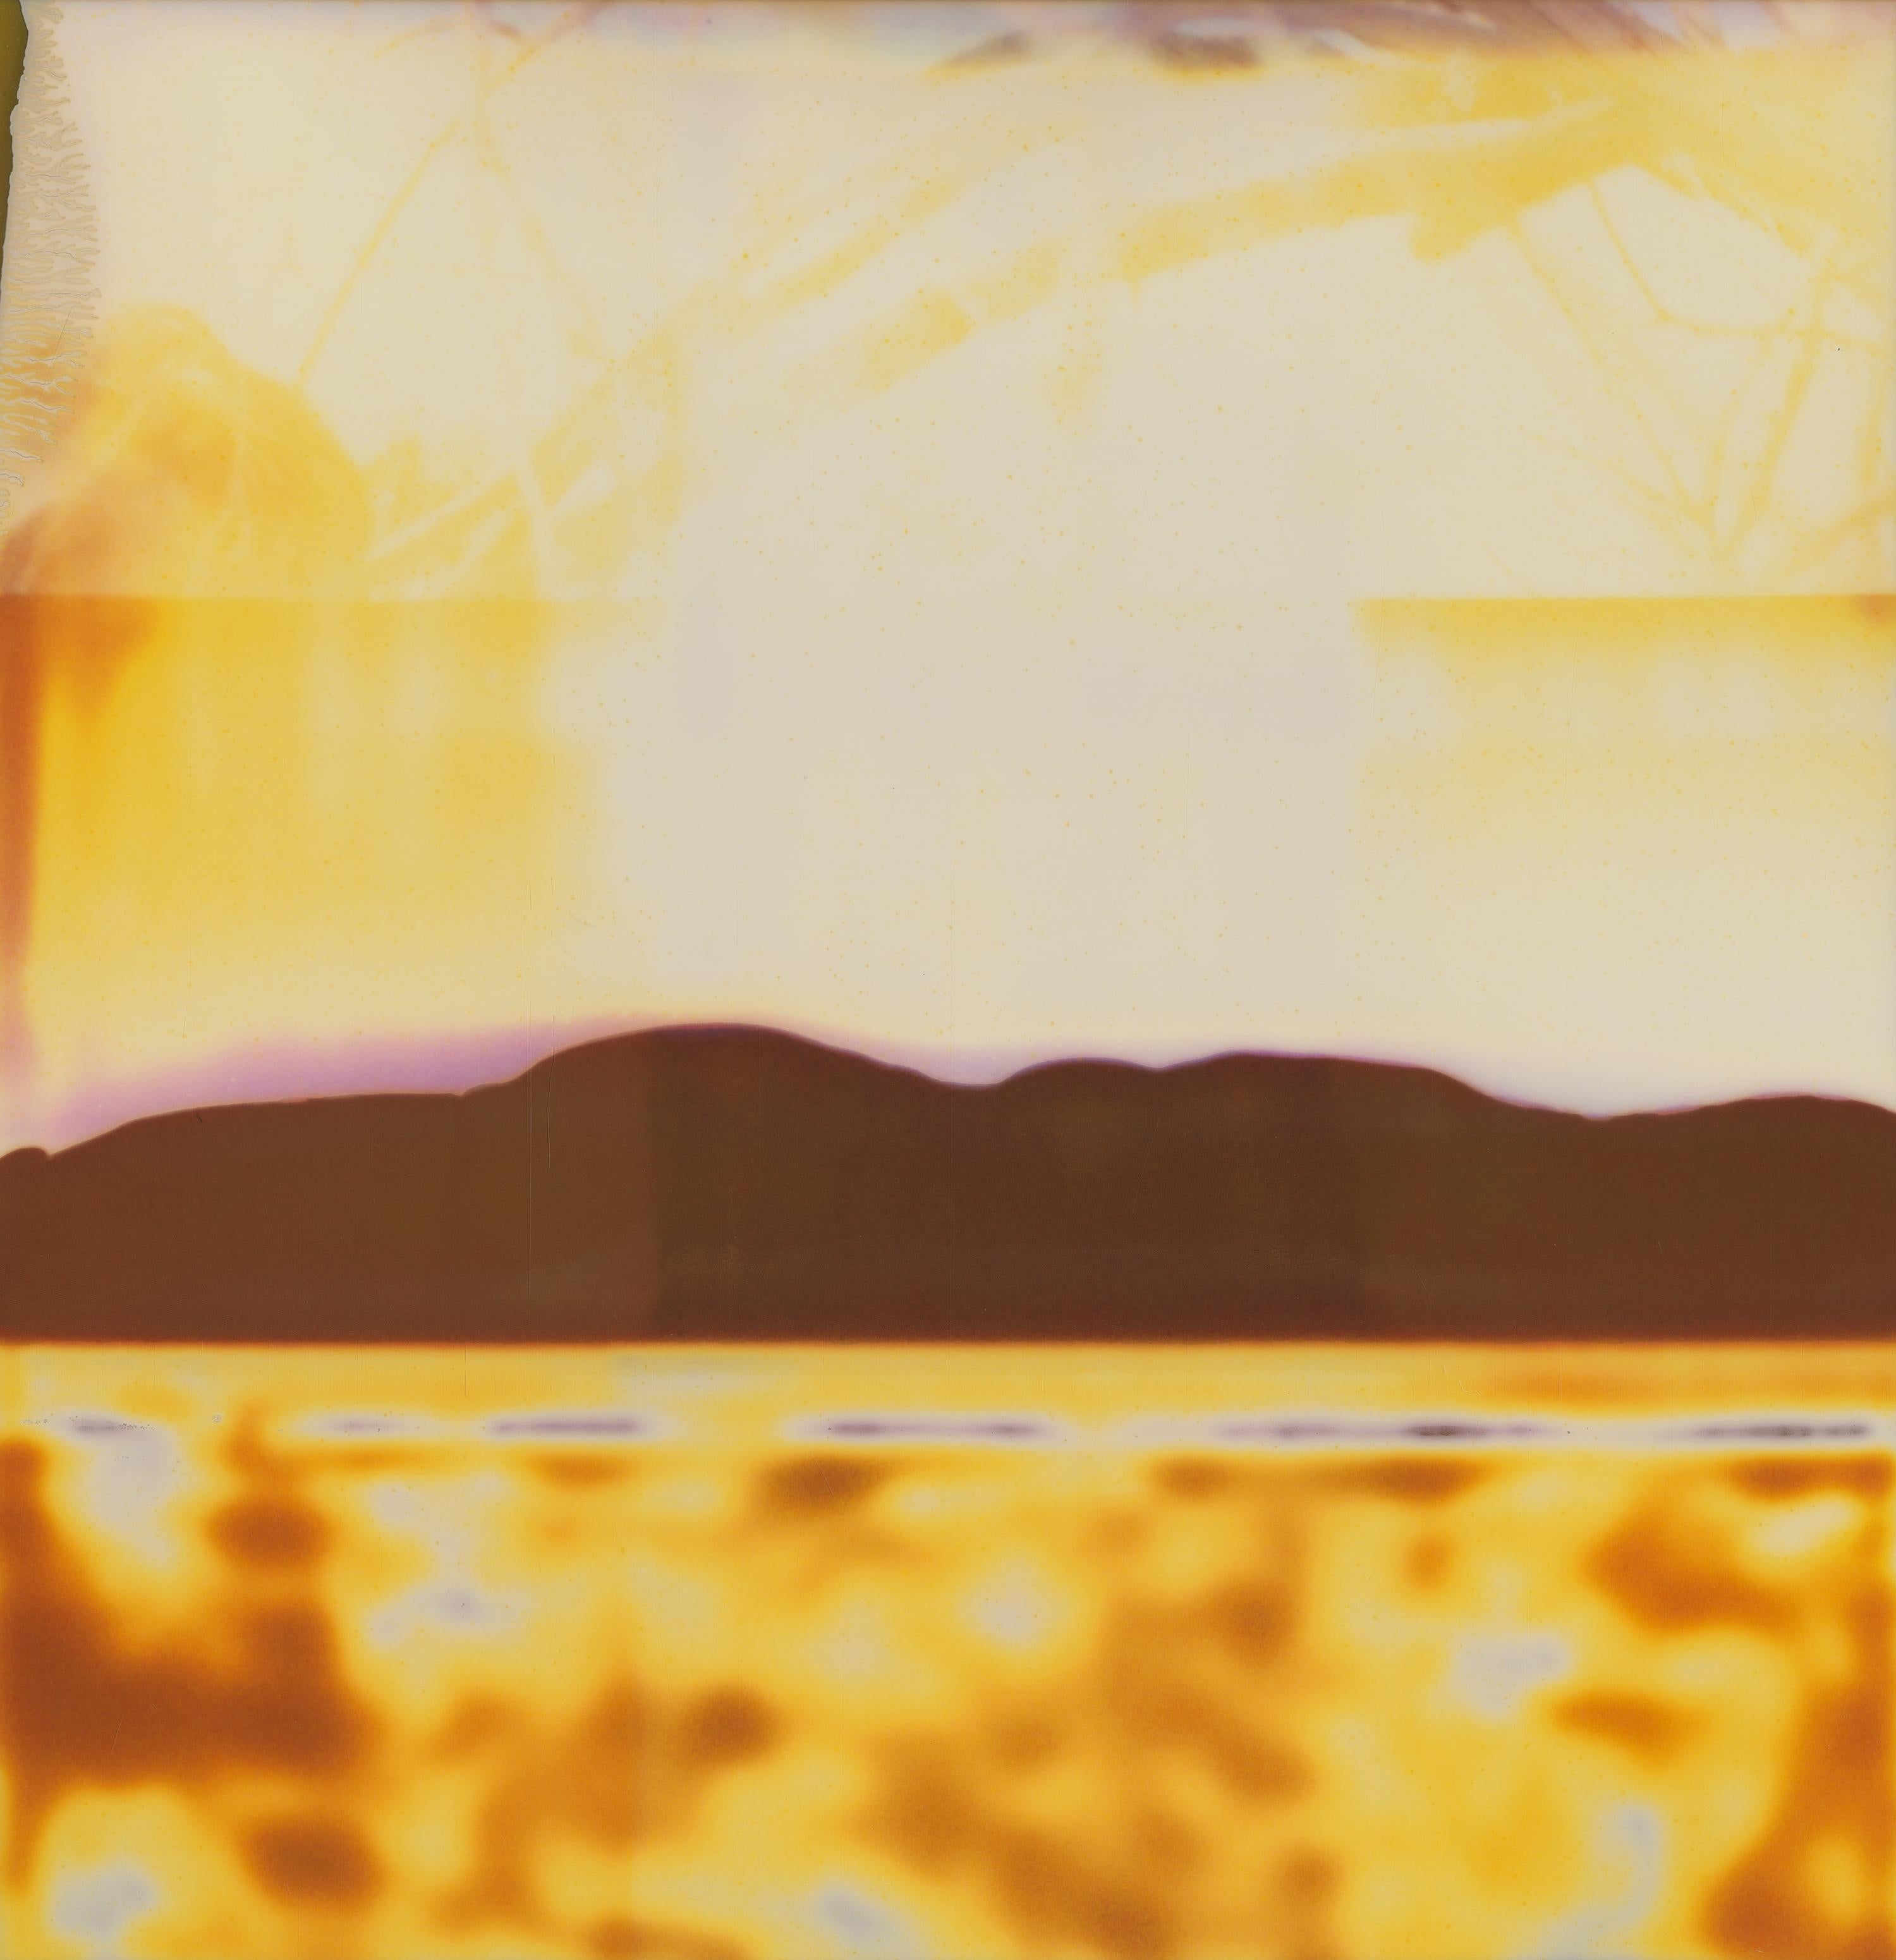 Stefanie Schneider Abstract Photograph - Sunset (Deconstructivism) - Contemporary, Expired Polaroid